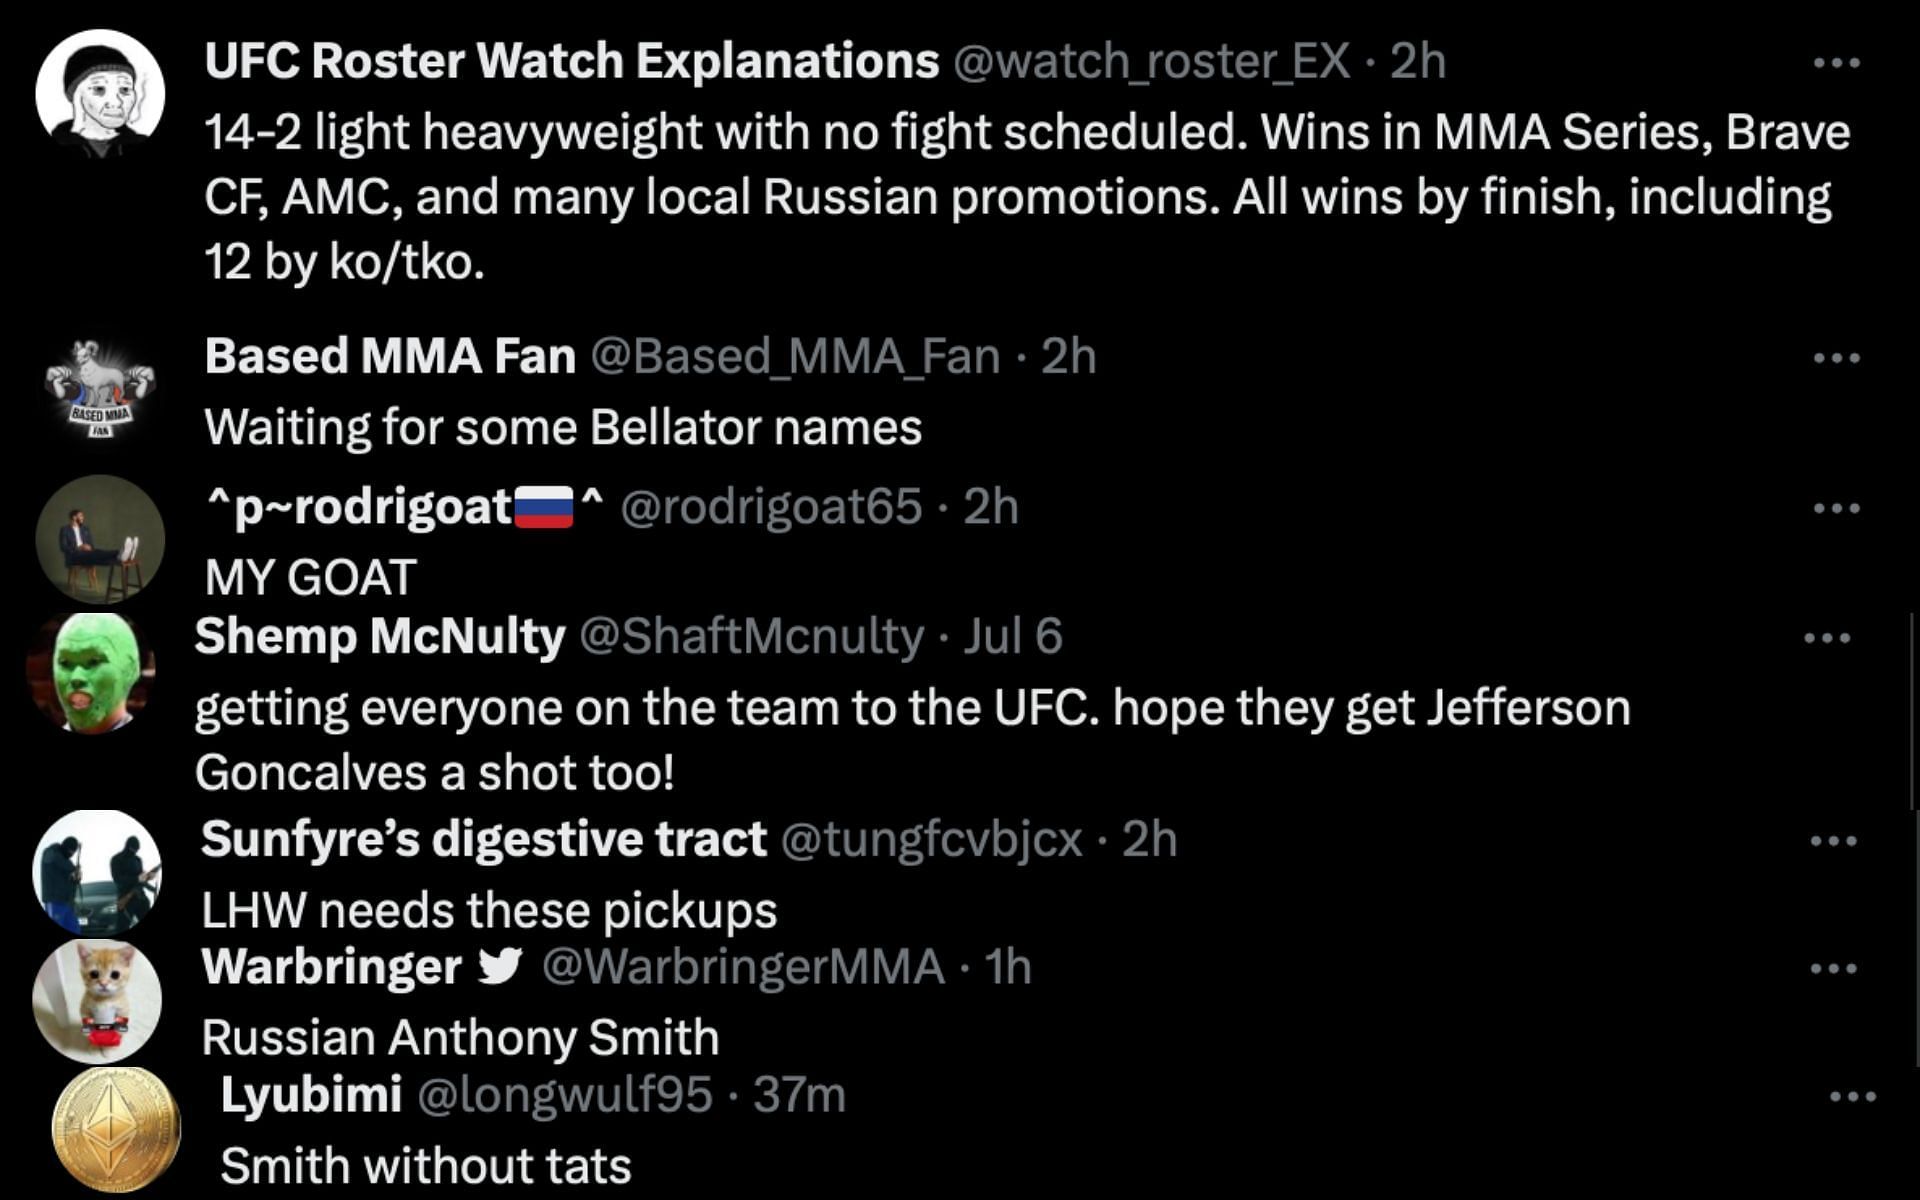 Screenshots from @UFCRosterWatch on Twitter